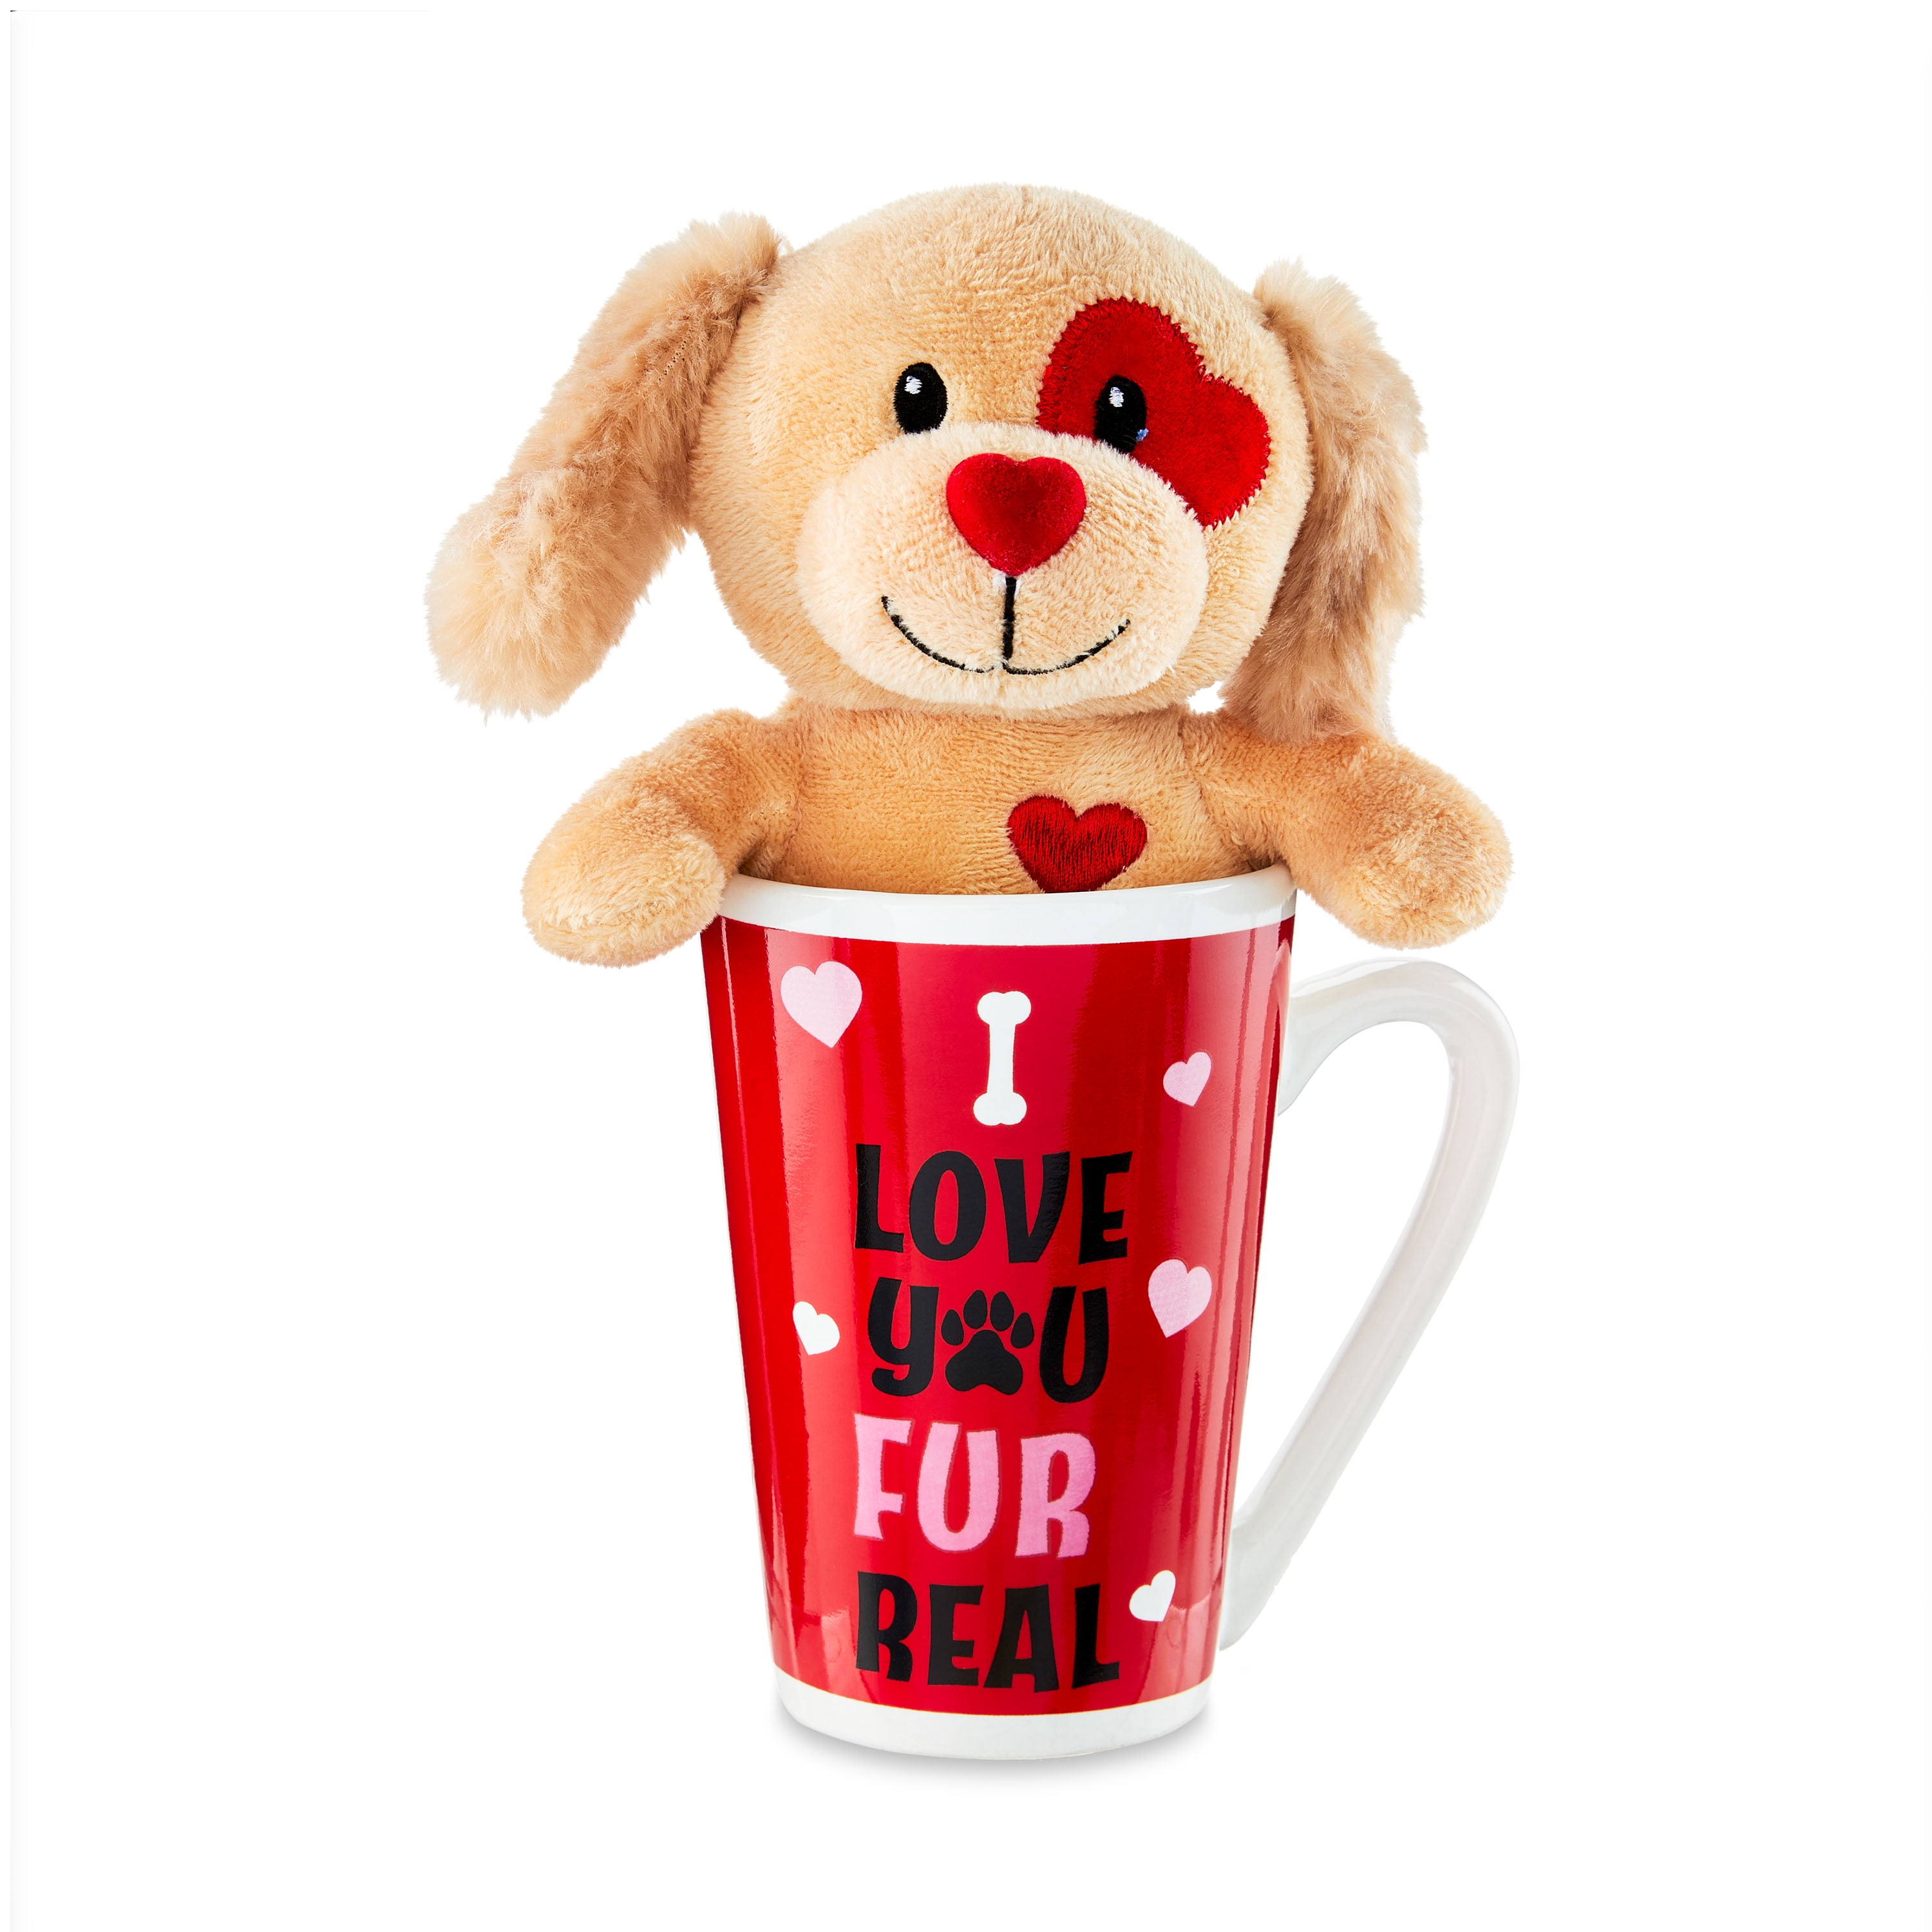 Way to Celebrate! Valentine's Day Plush Toy in Latte Mug, Puppy